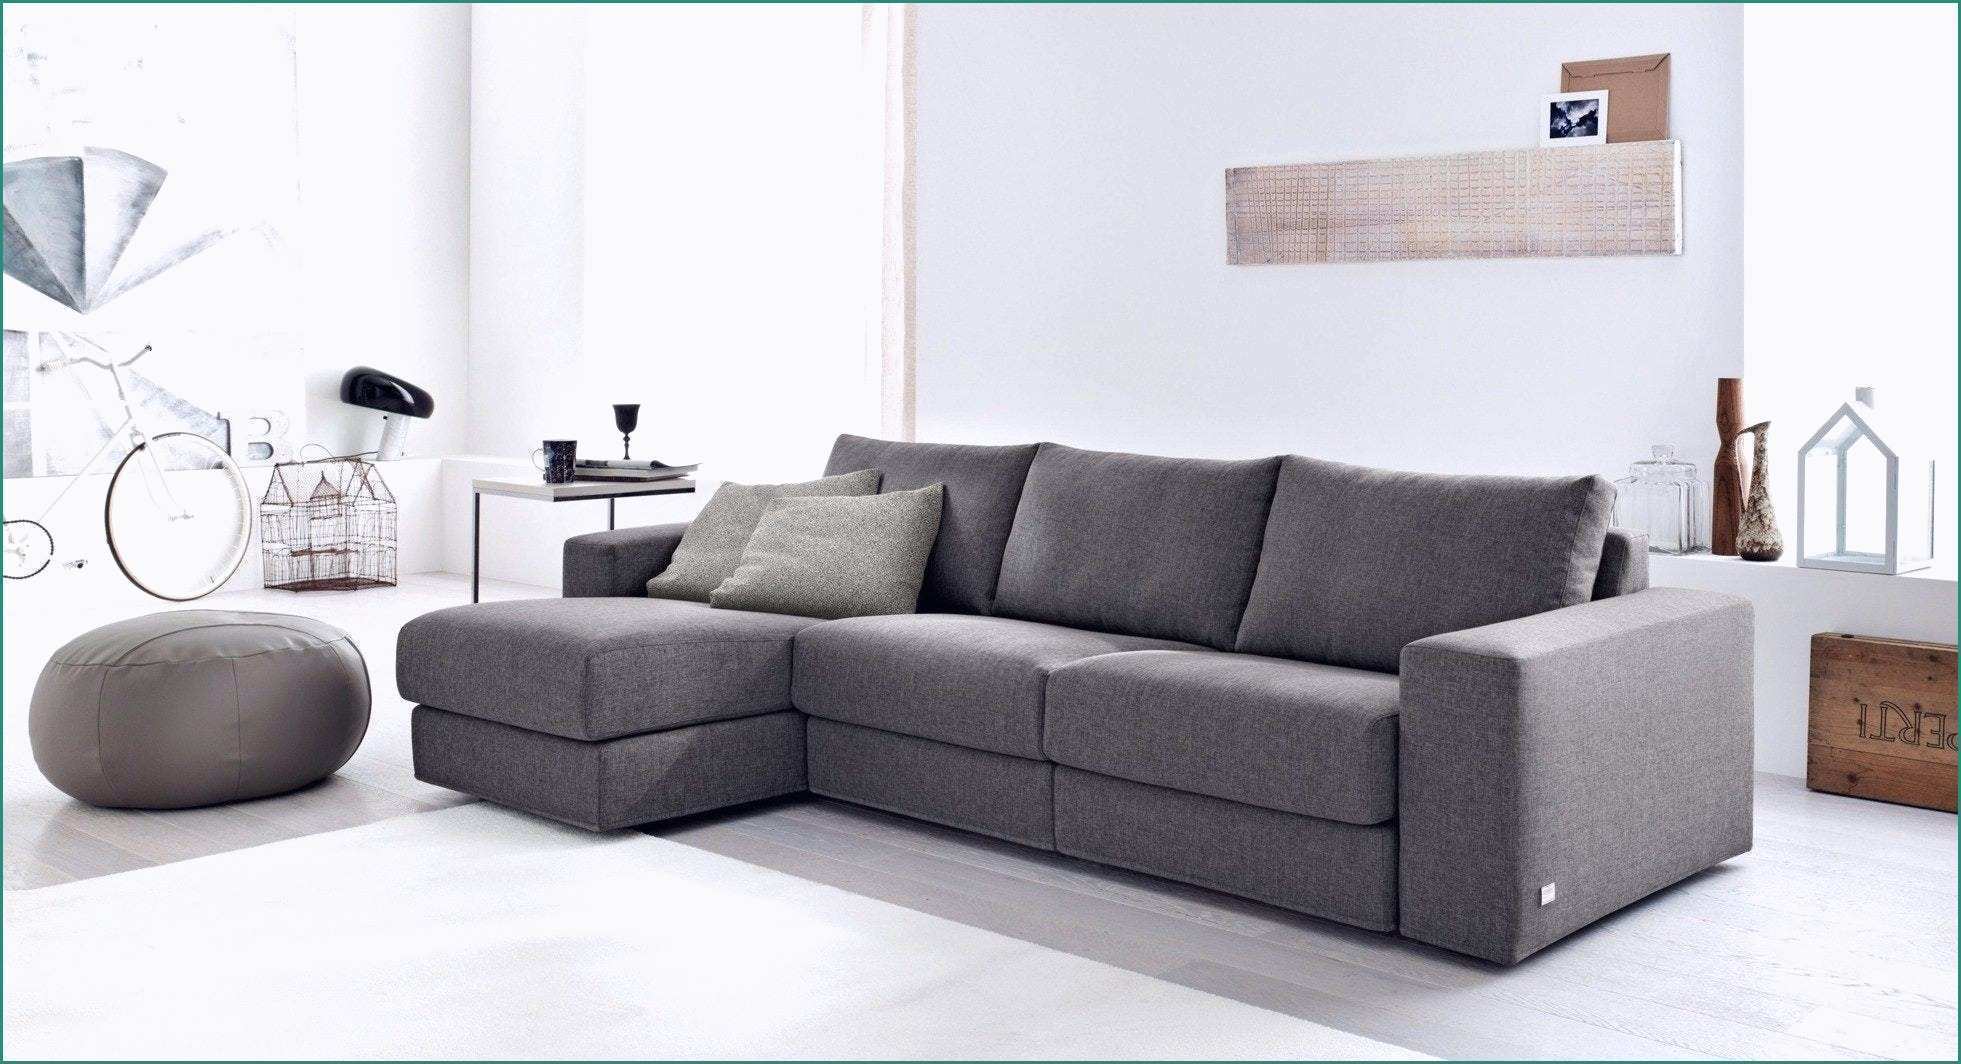 Poltrone E sofa Offerte E 15 Incredibile Poltrone E sofa Firenze